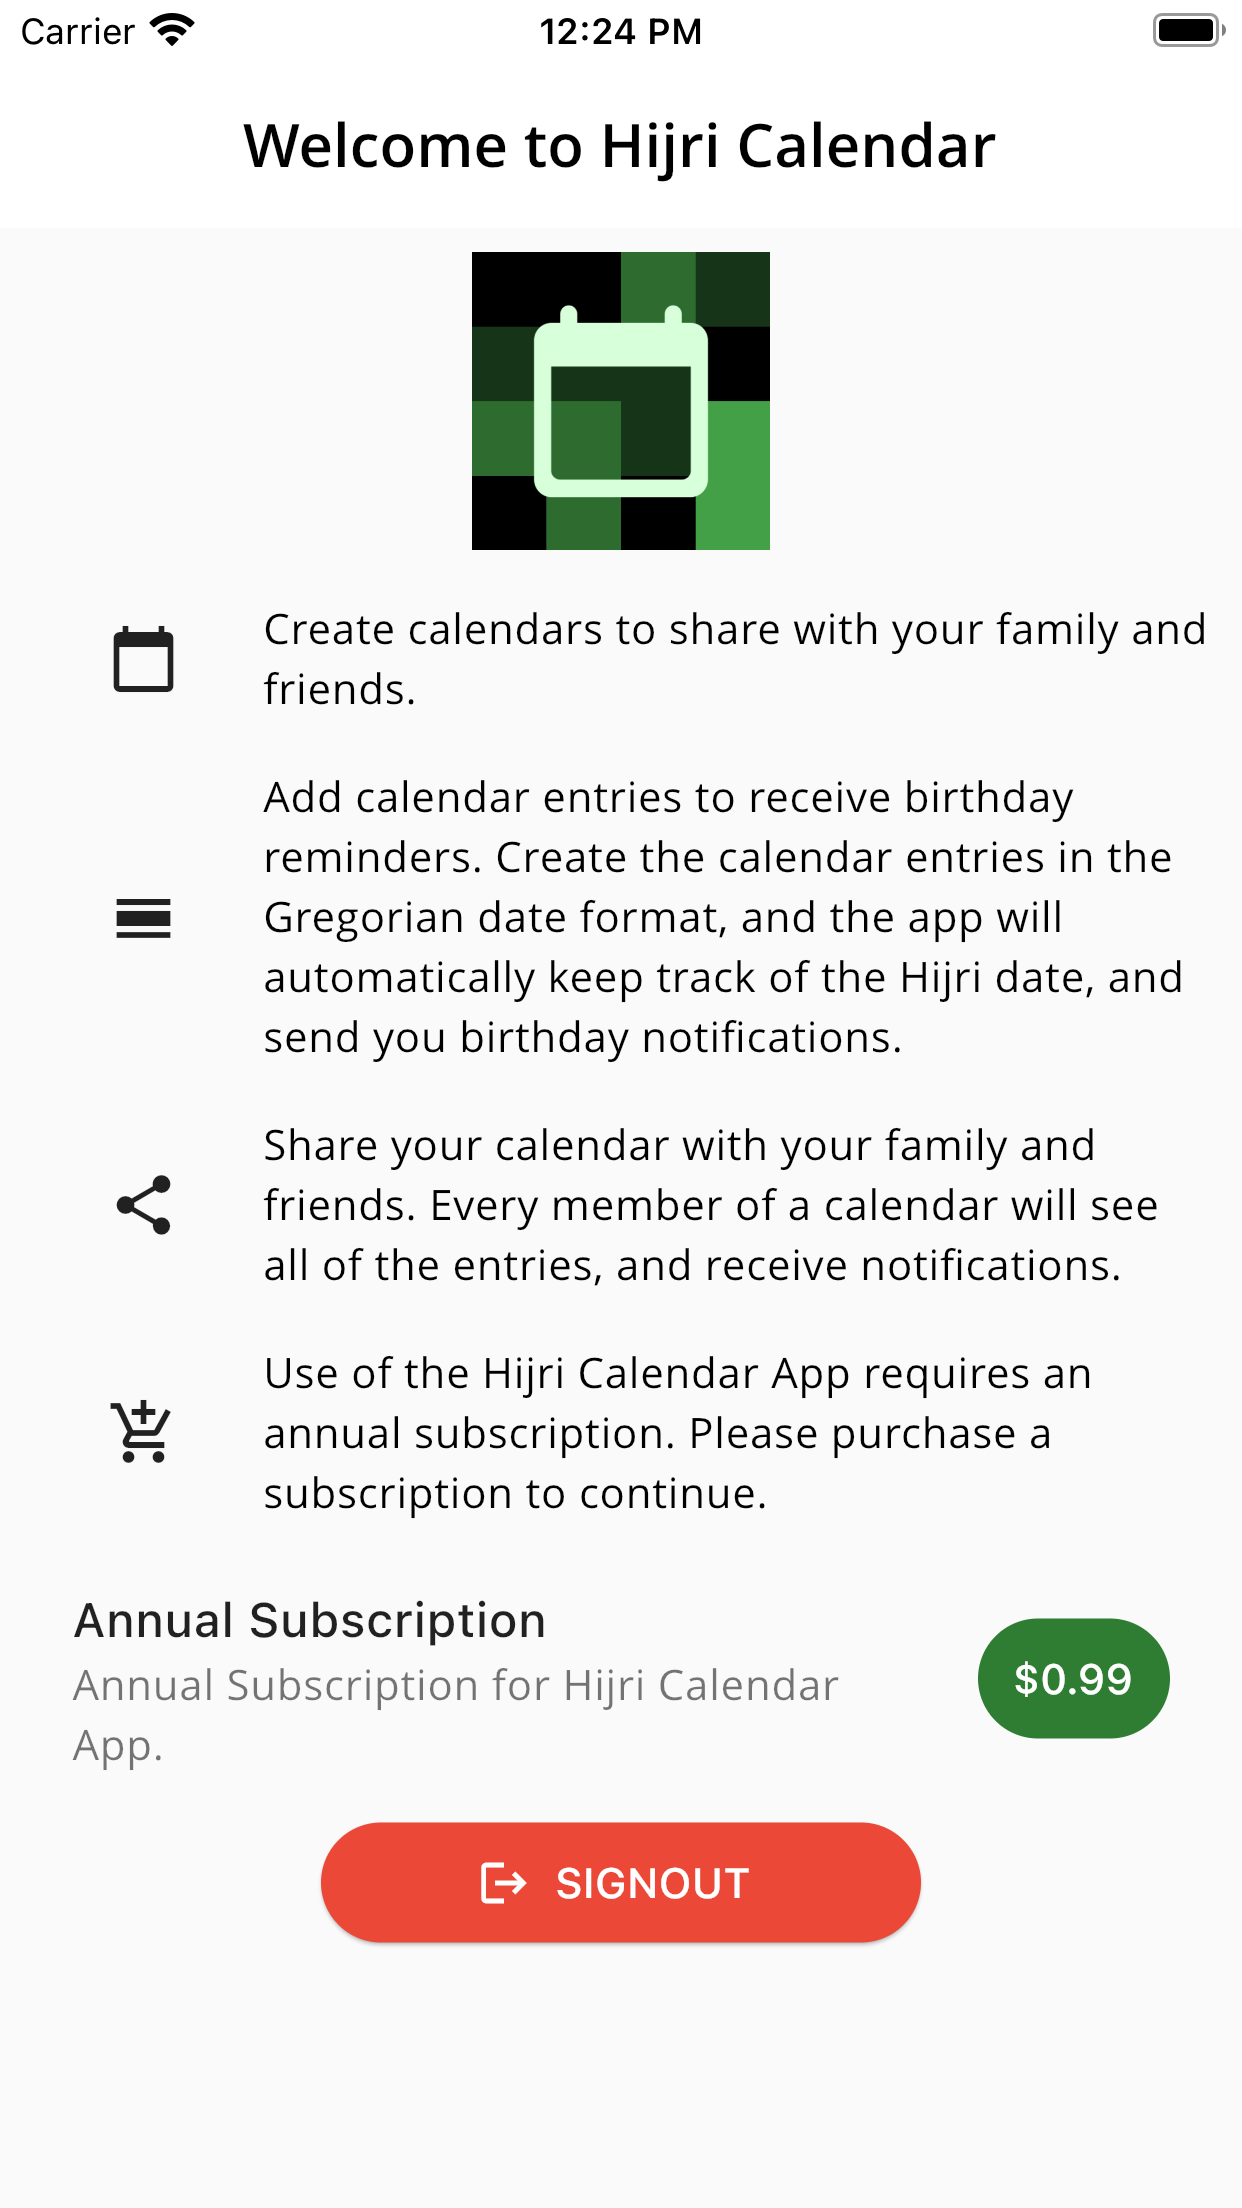 Hijri Calendar App - Purchase